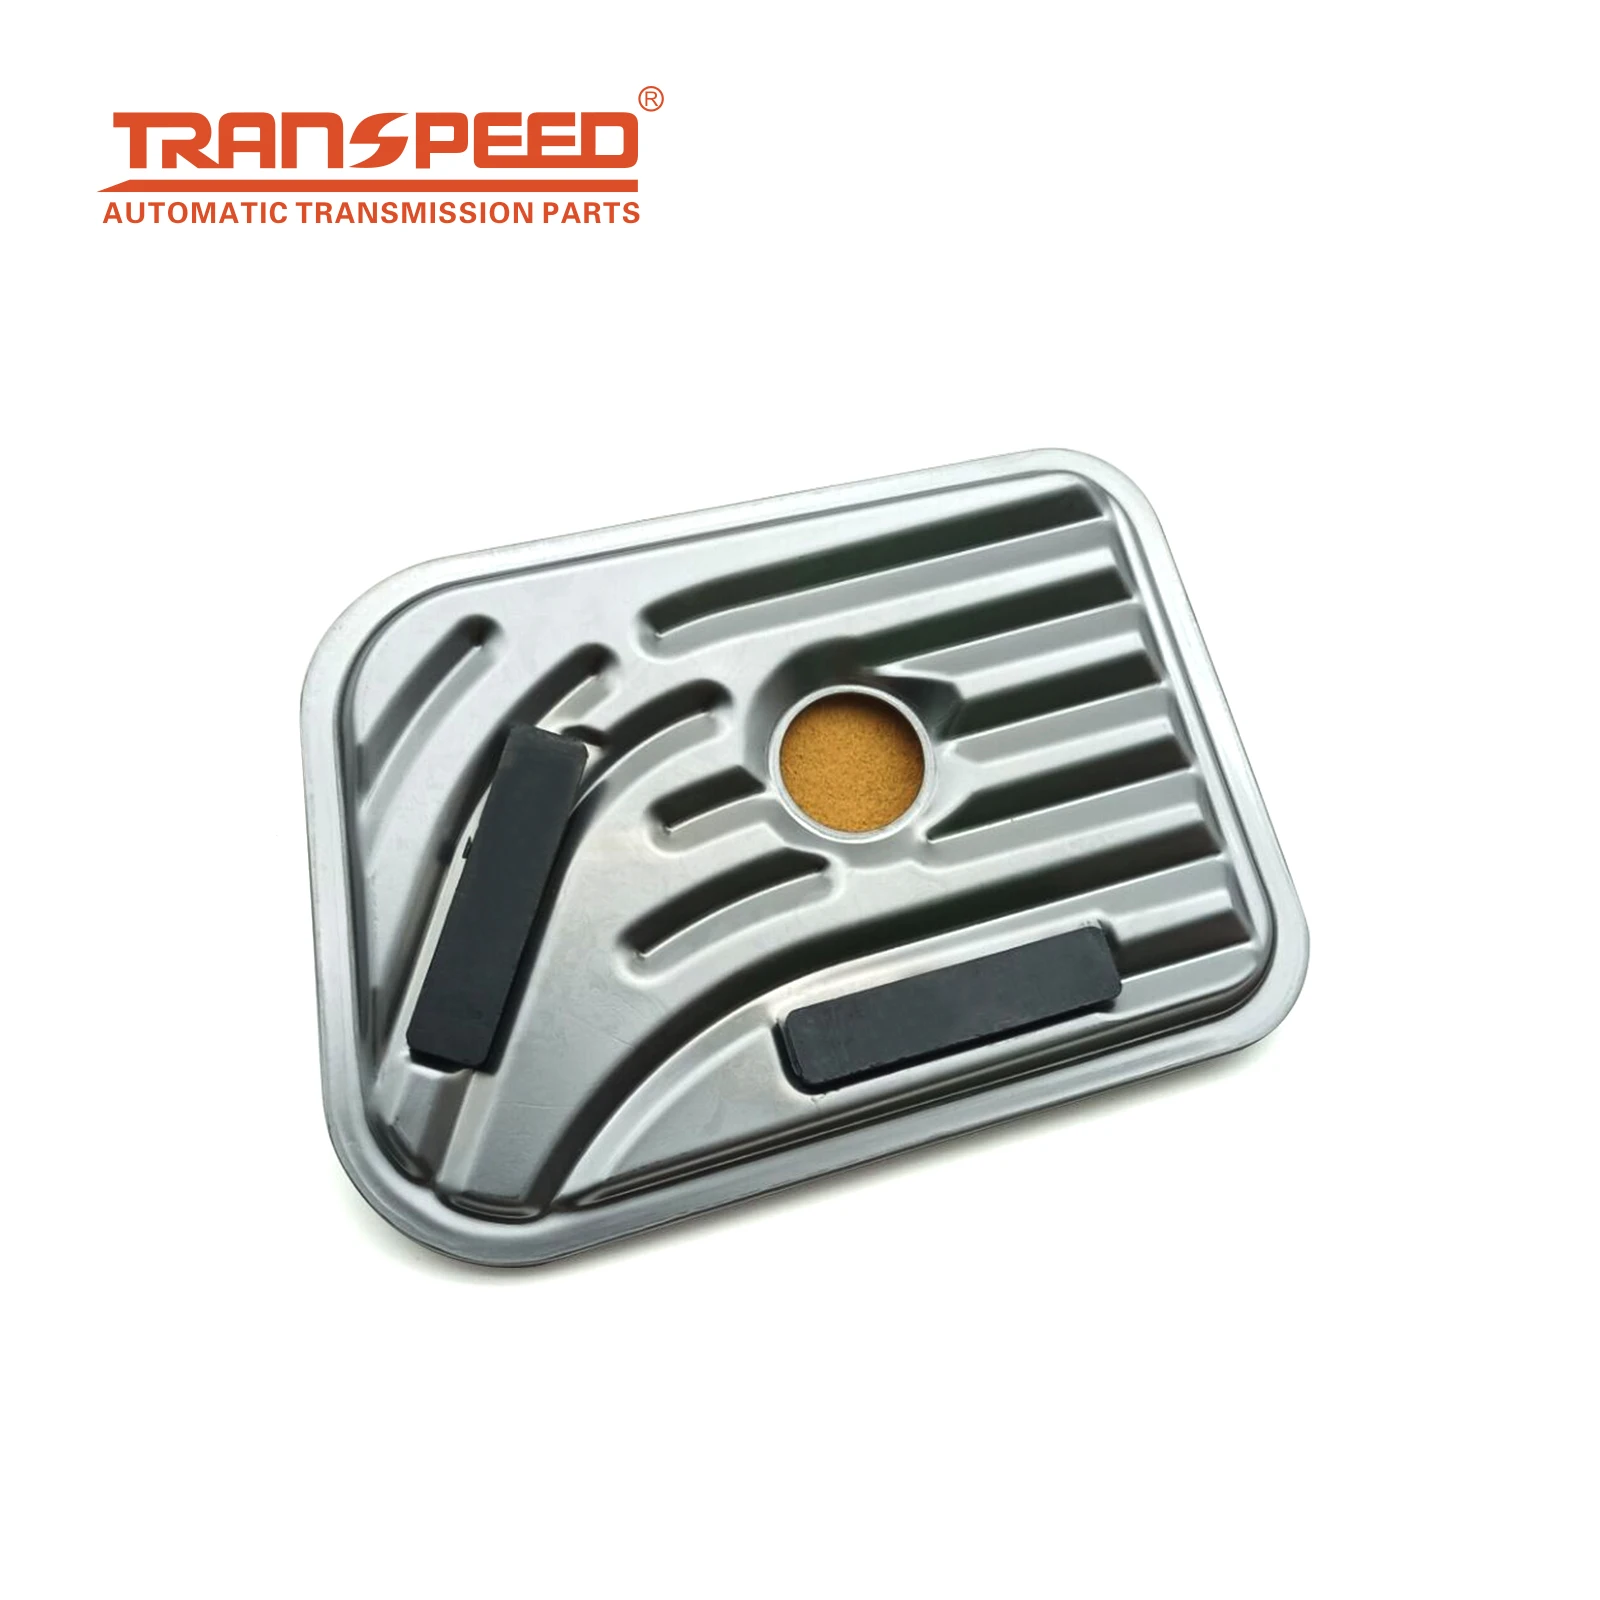 TRANSPEED Auto Transmission System Super Rebuild Gearbox Kit